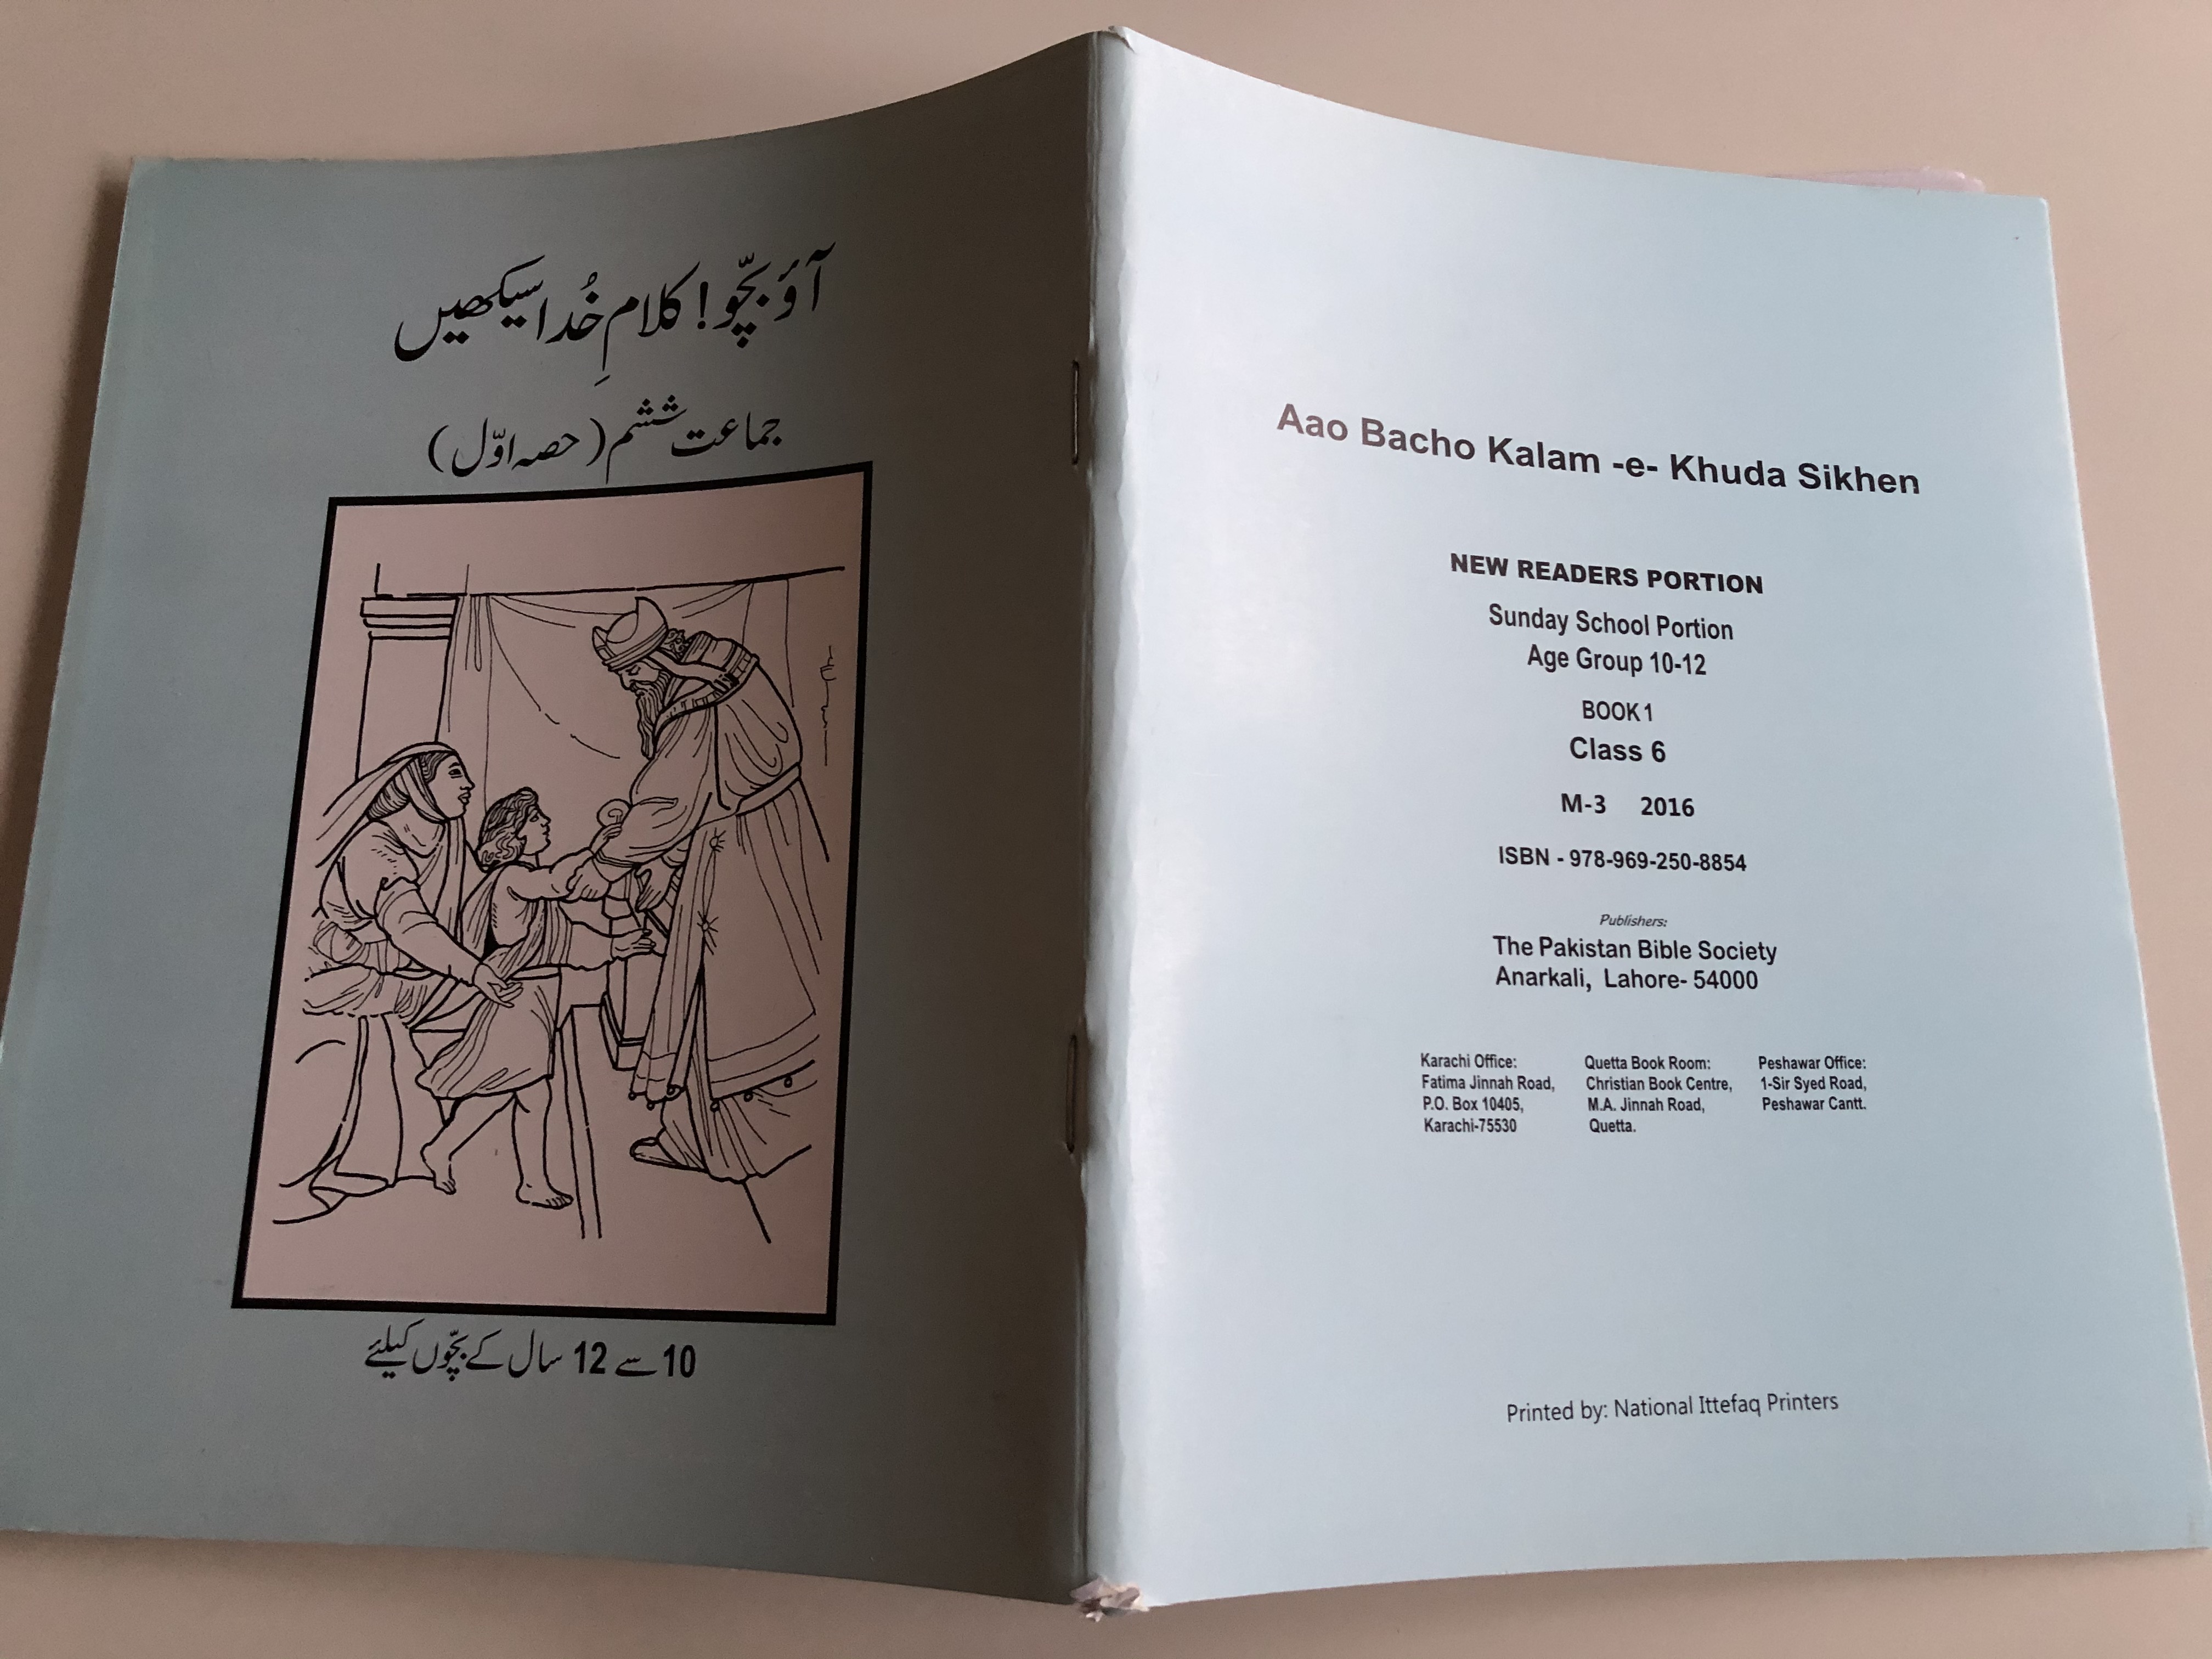 urdu-sunday-school-reading-book-1-class-6-new-readers-portion-aao-bacho-15.jpg